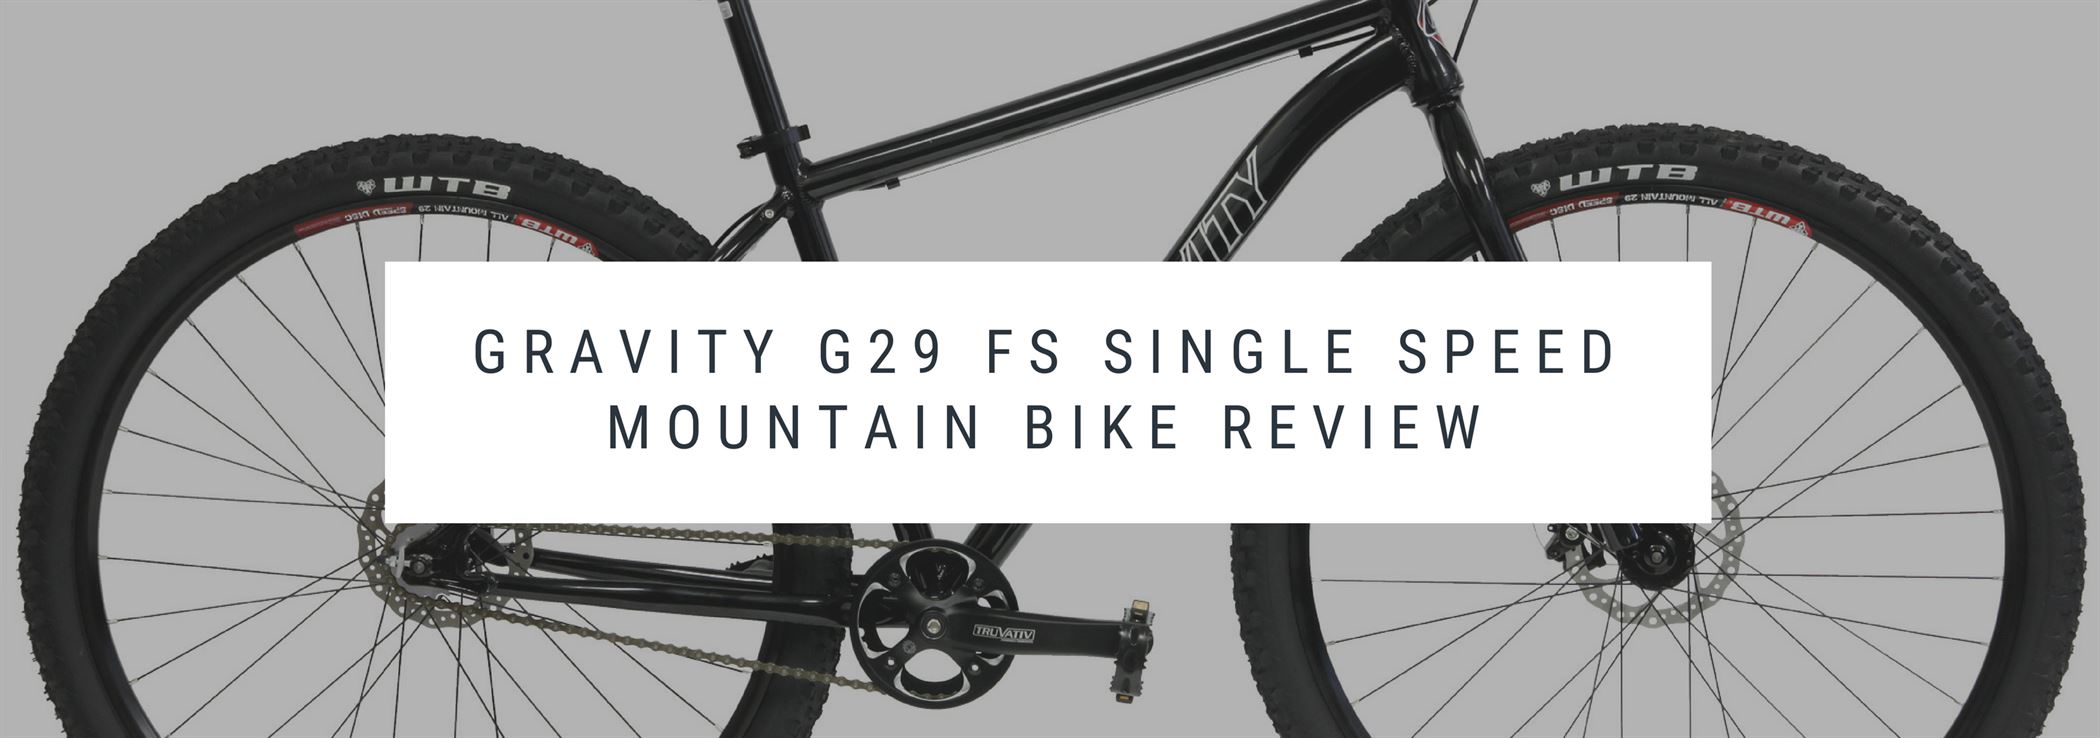 single speed mountain bike reviews